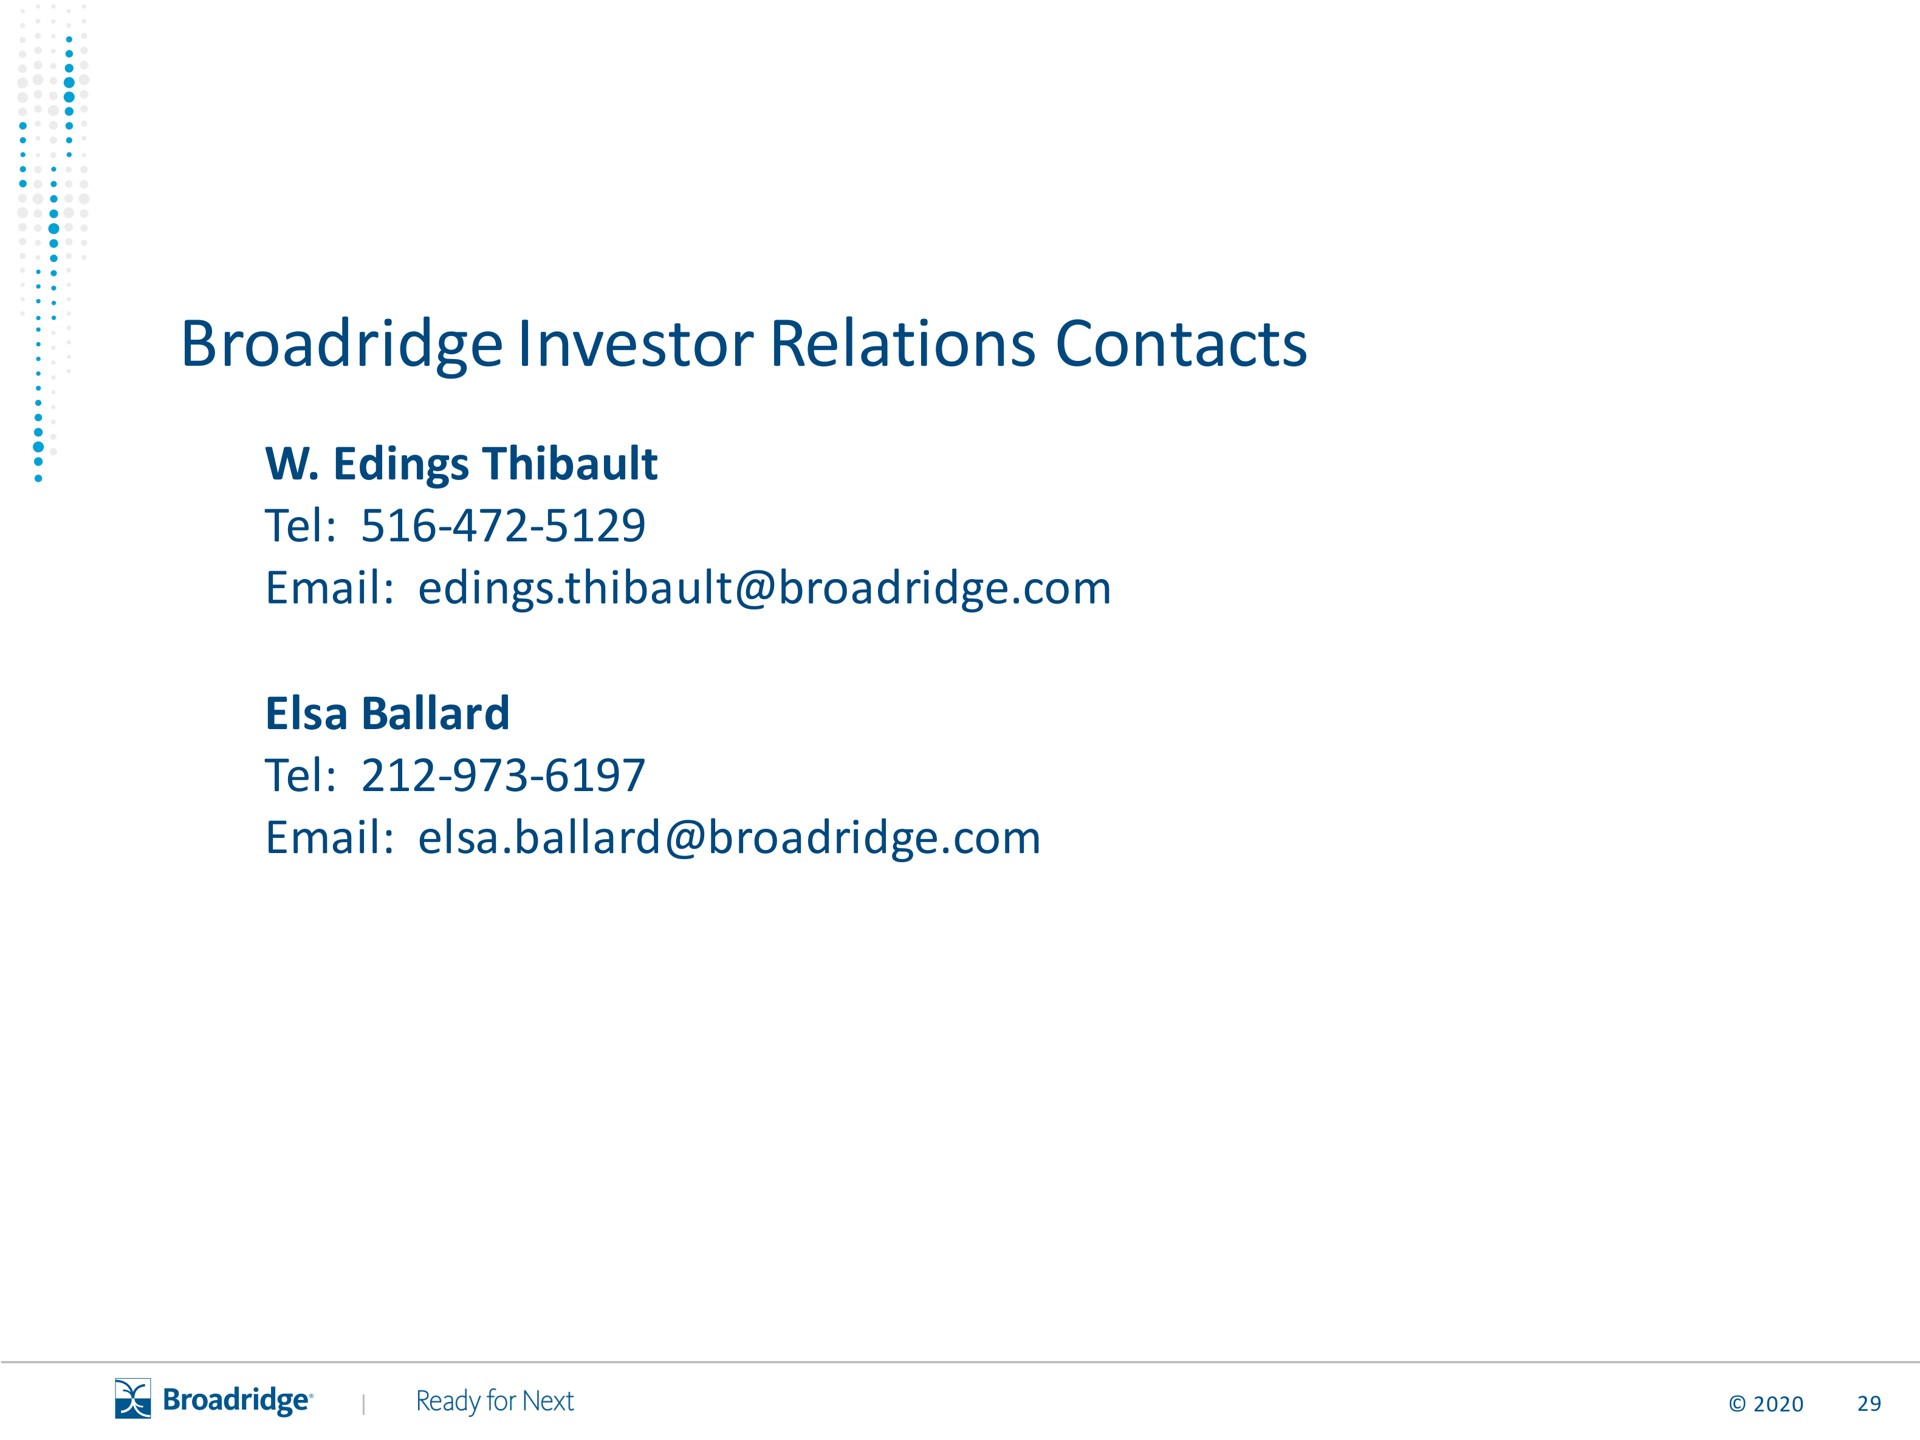 investor relations contacts | Broadridge Financial Solutions